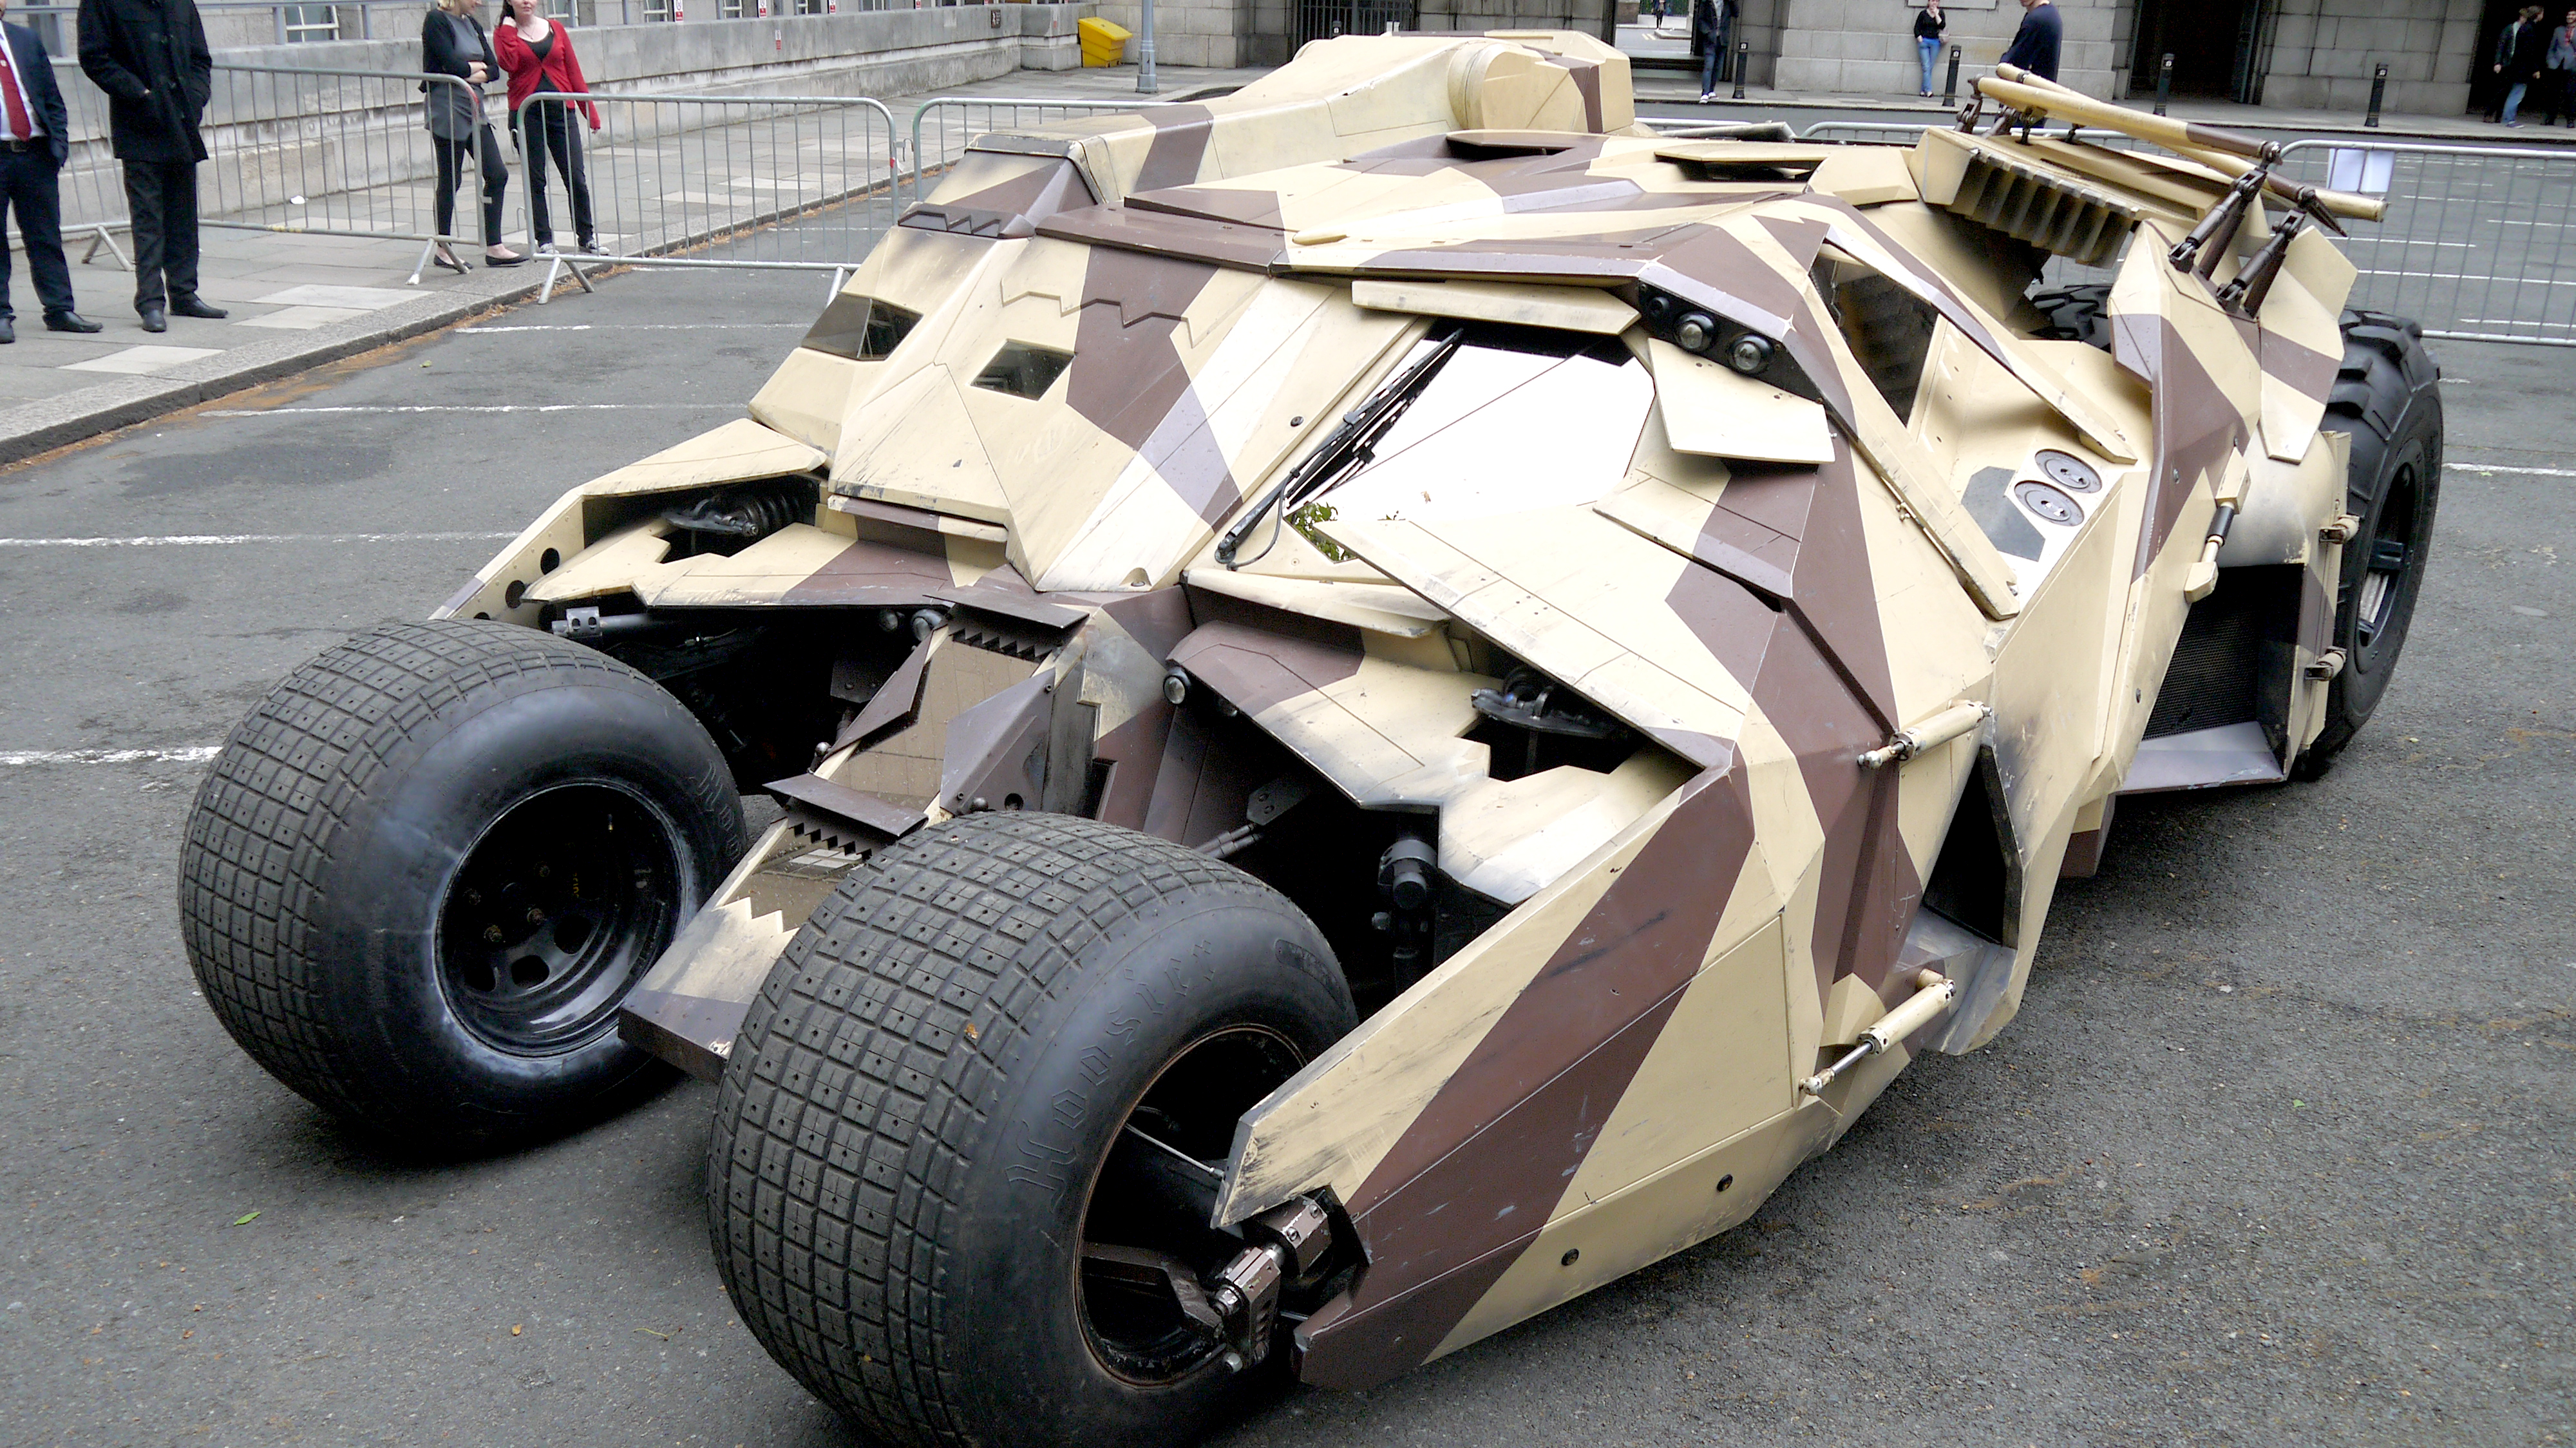 Building Batman's car: the making of the dark knight's tumbler